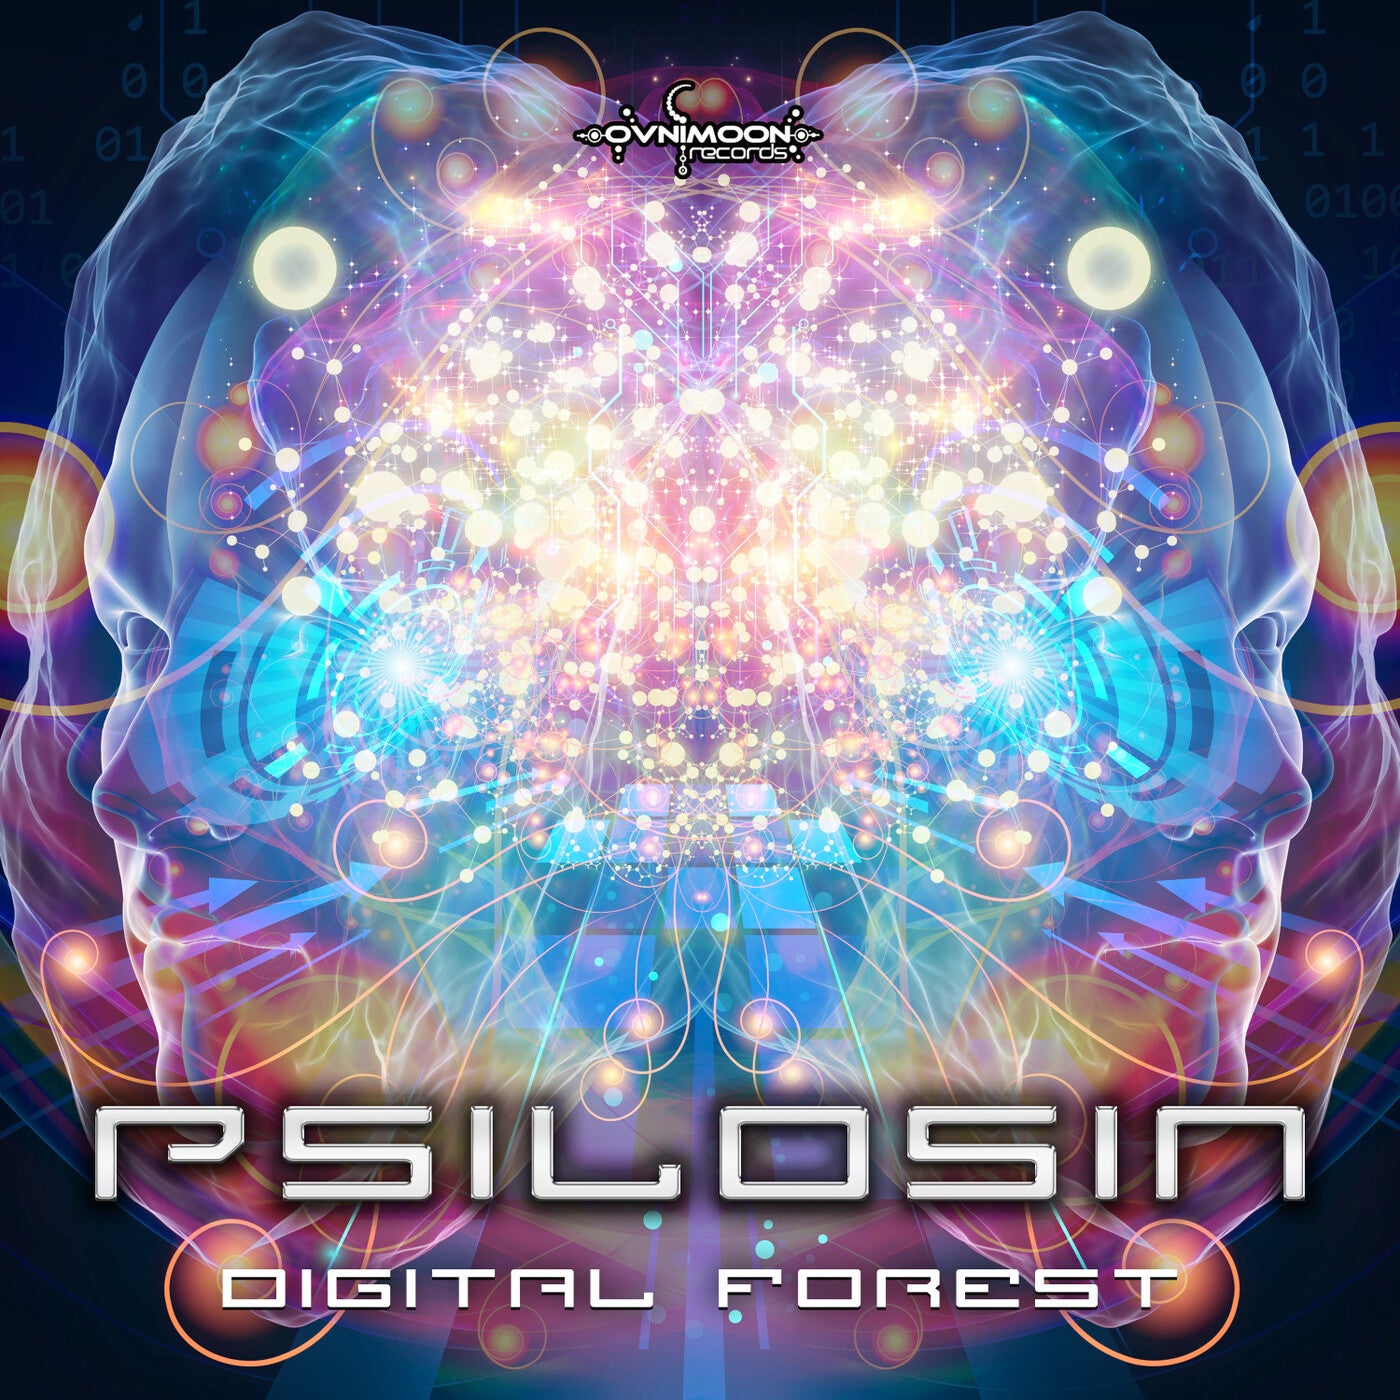 Digital Forest